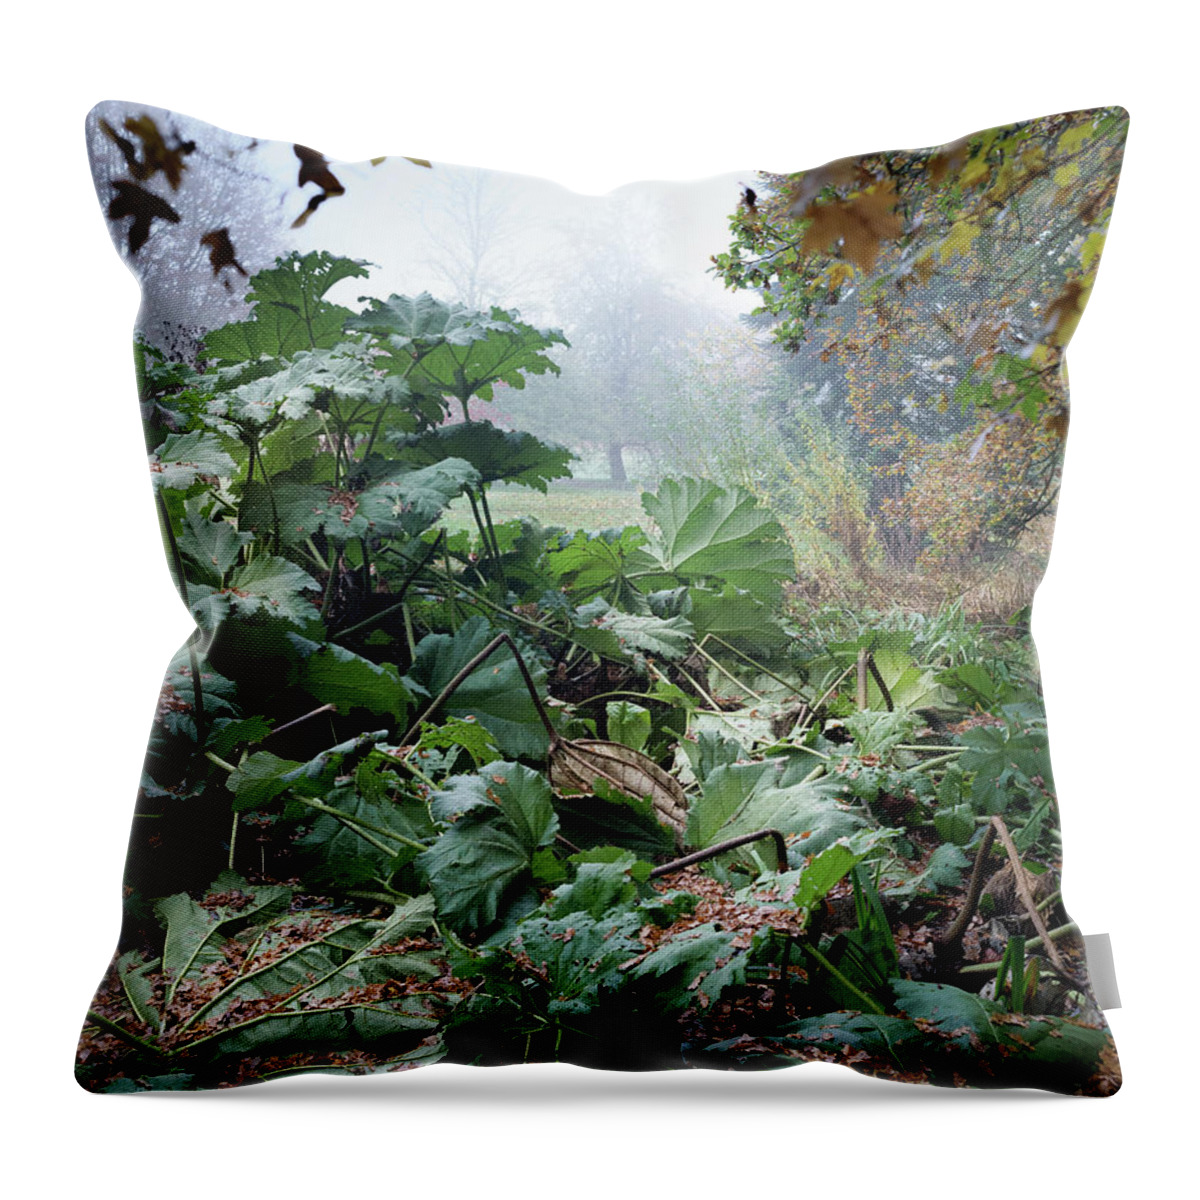 Autumn Throw Pillow featuring the photograph Autumn Mist, Great Dixter Garden by Perry Rodriguez